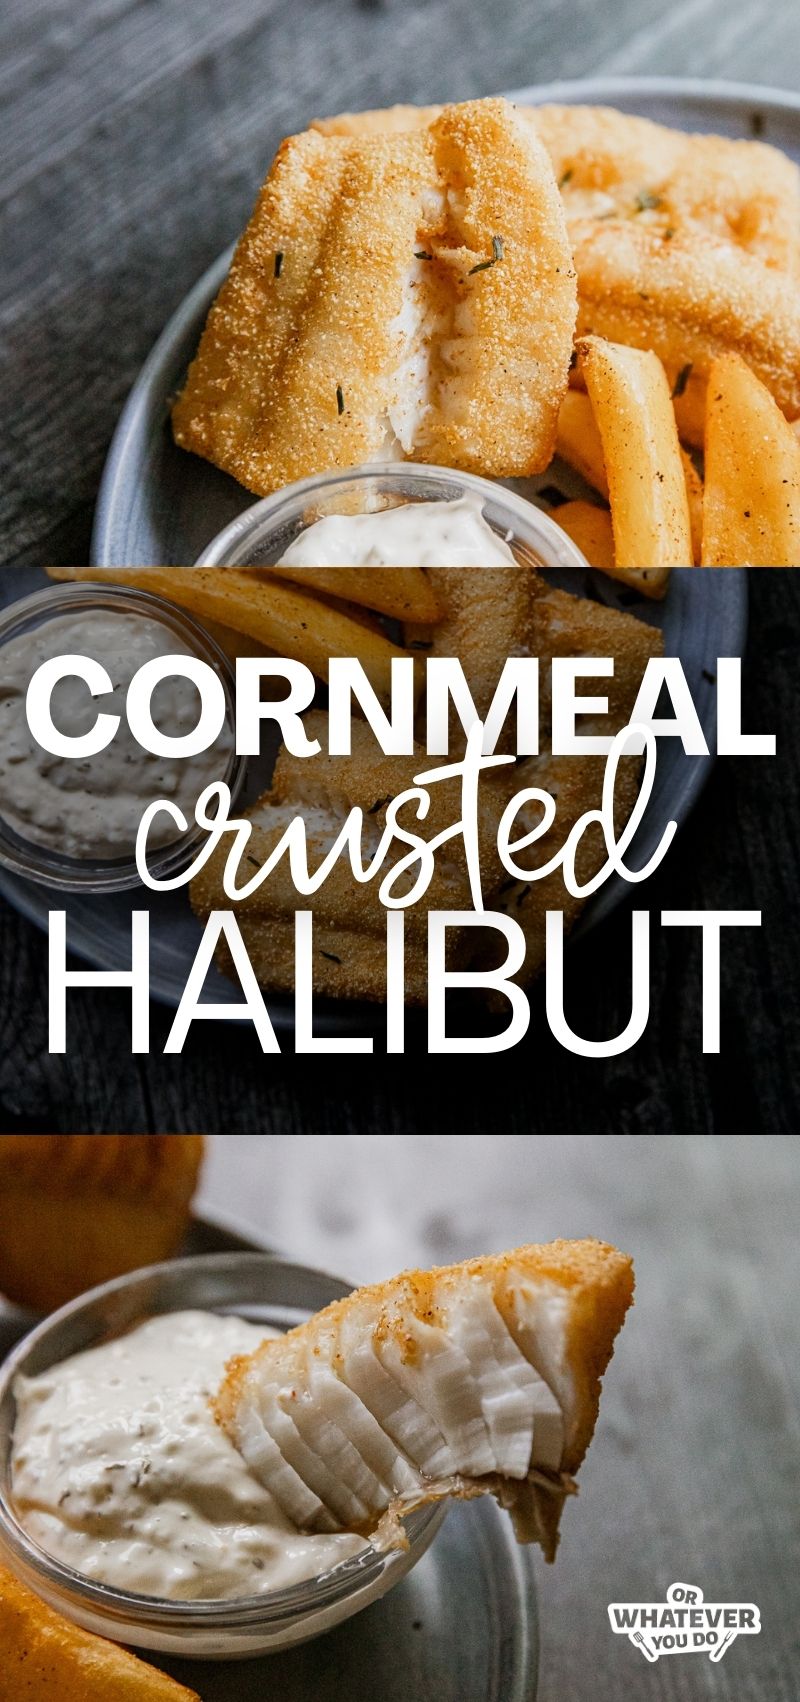 Cornmeal Crusted Halibut